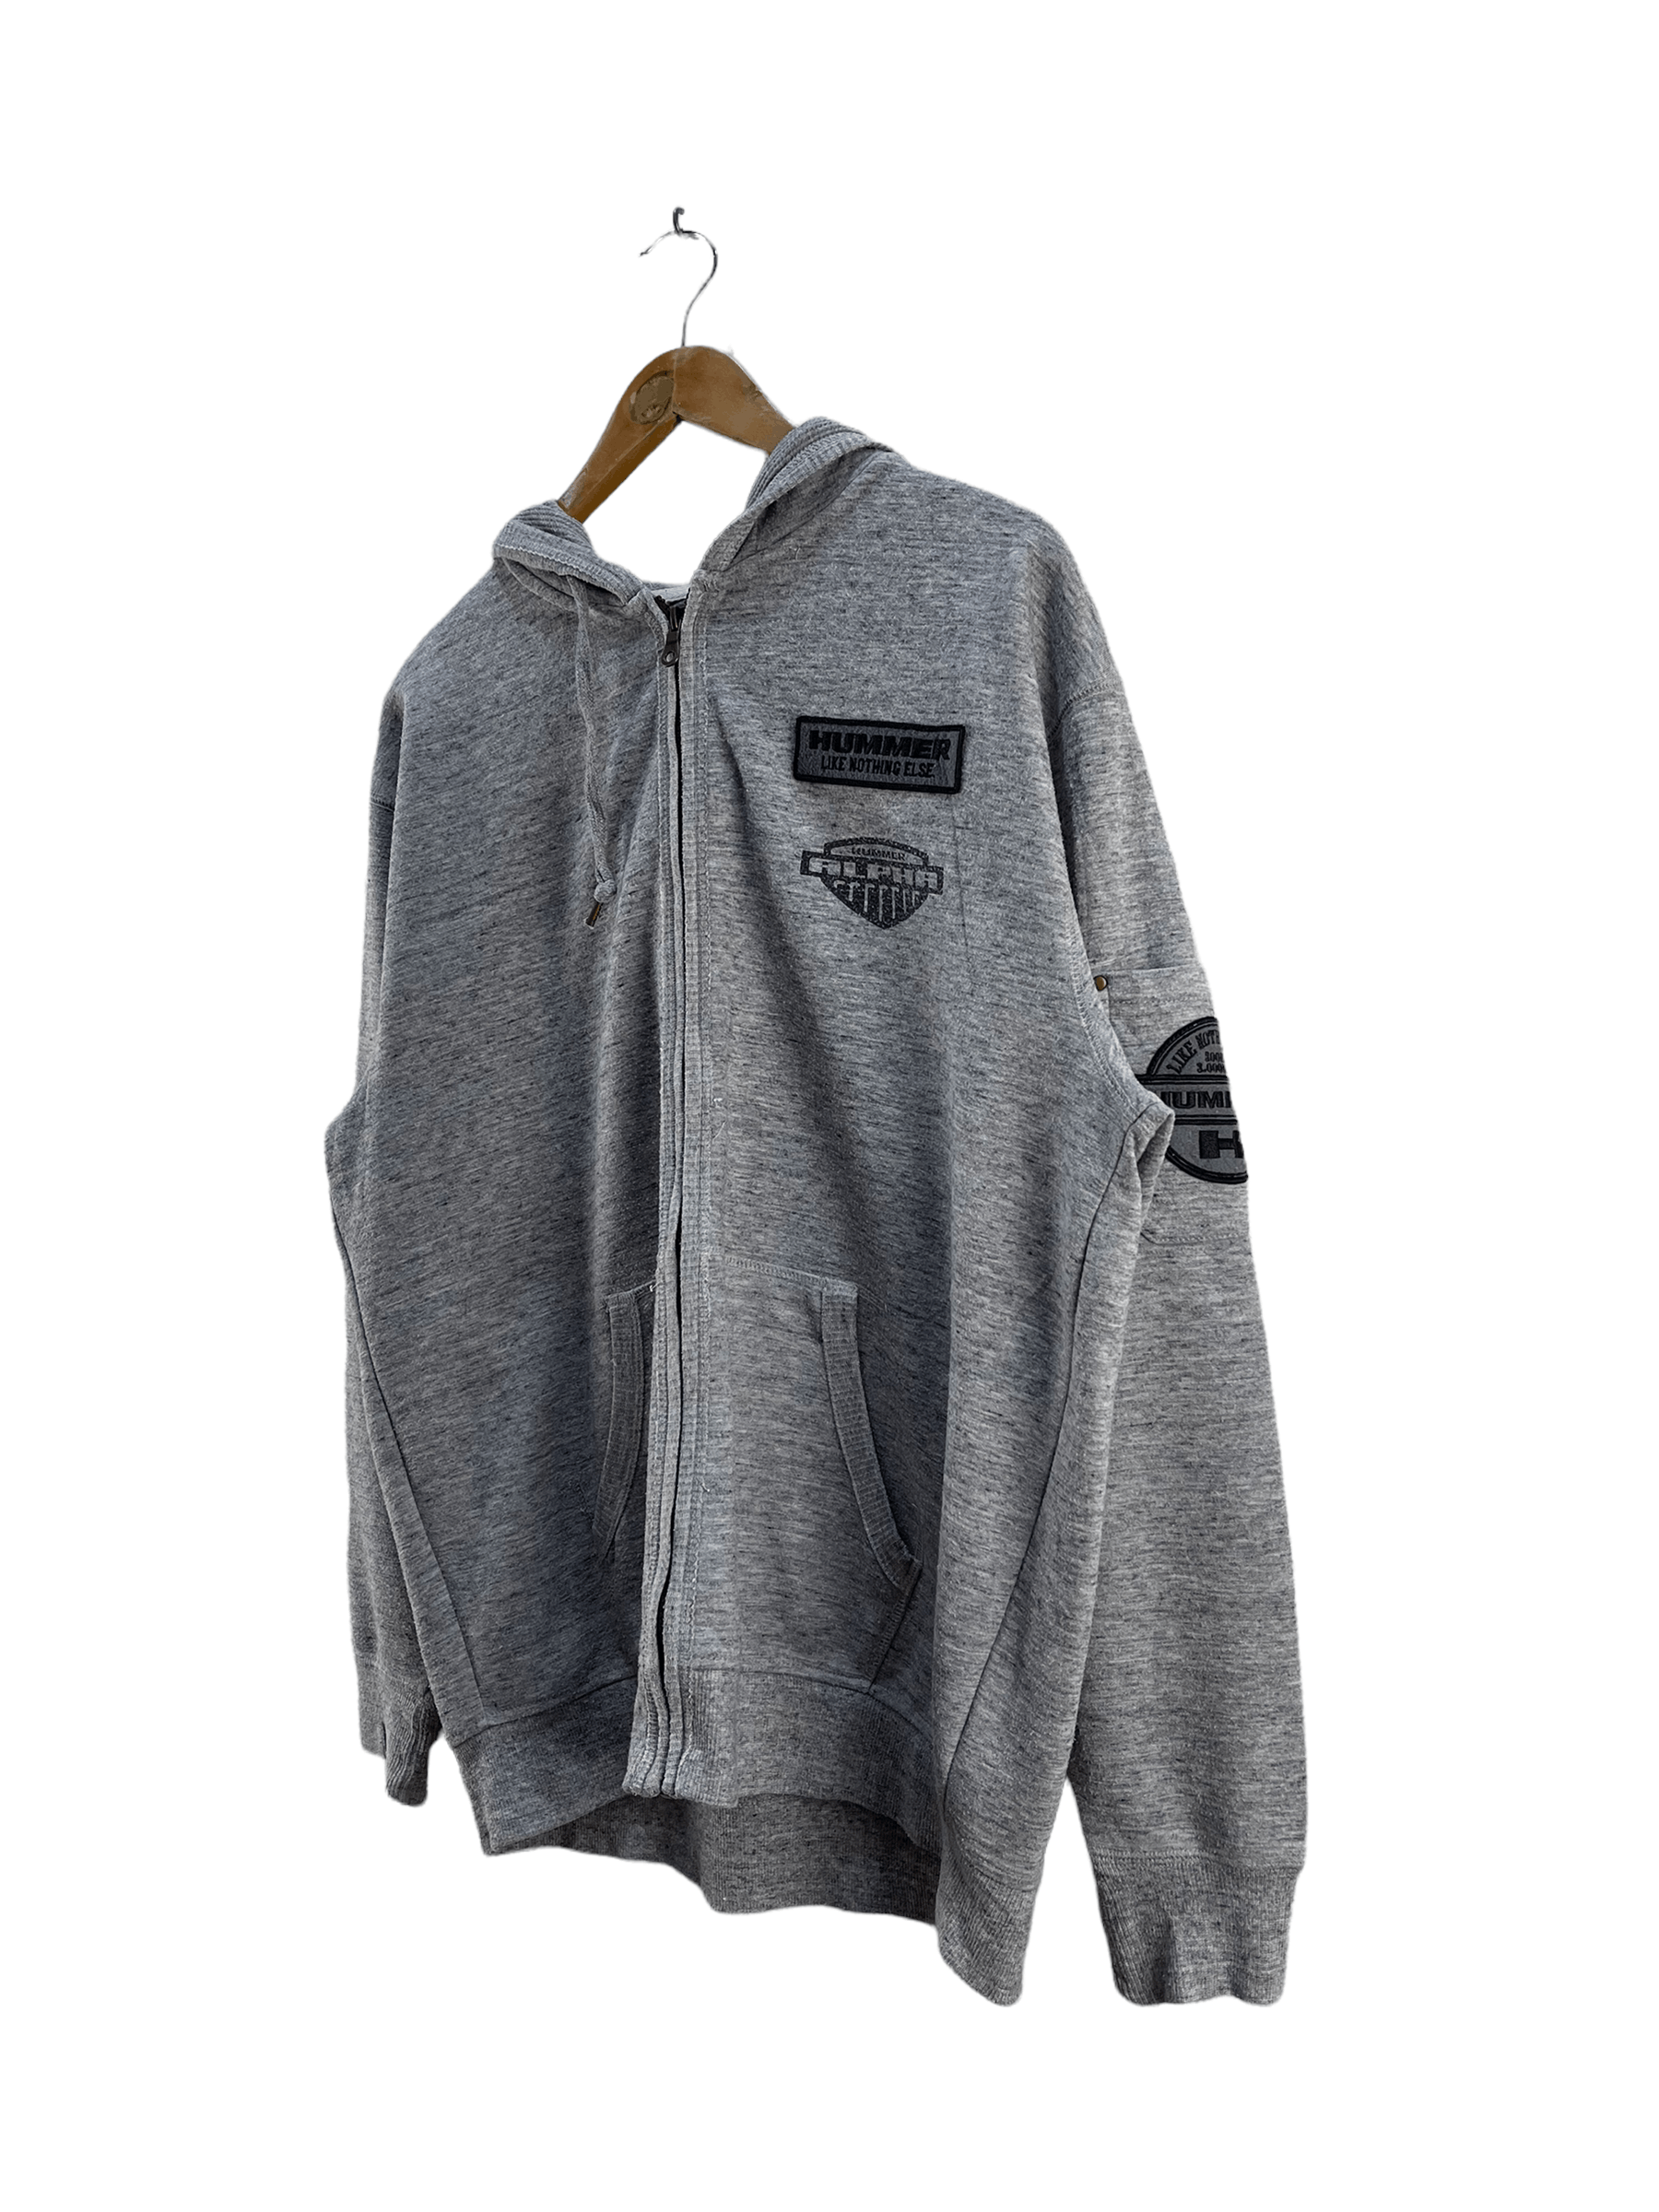 Japanese Brand Hummer Hoodies Sweater Jacket Size US L / EU 52-54 / 3 - 5 Thumbnail